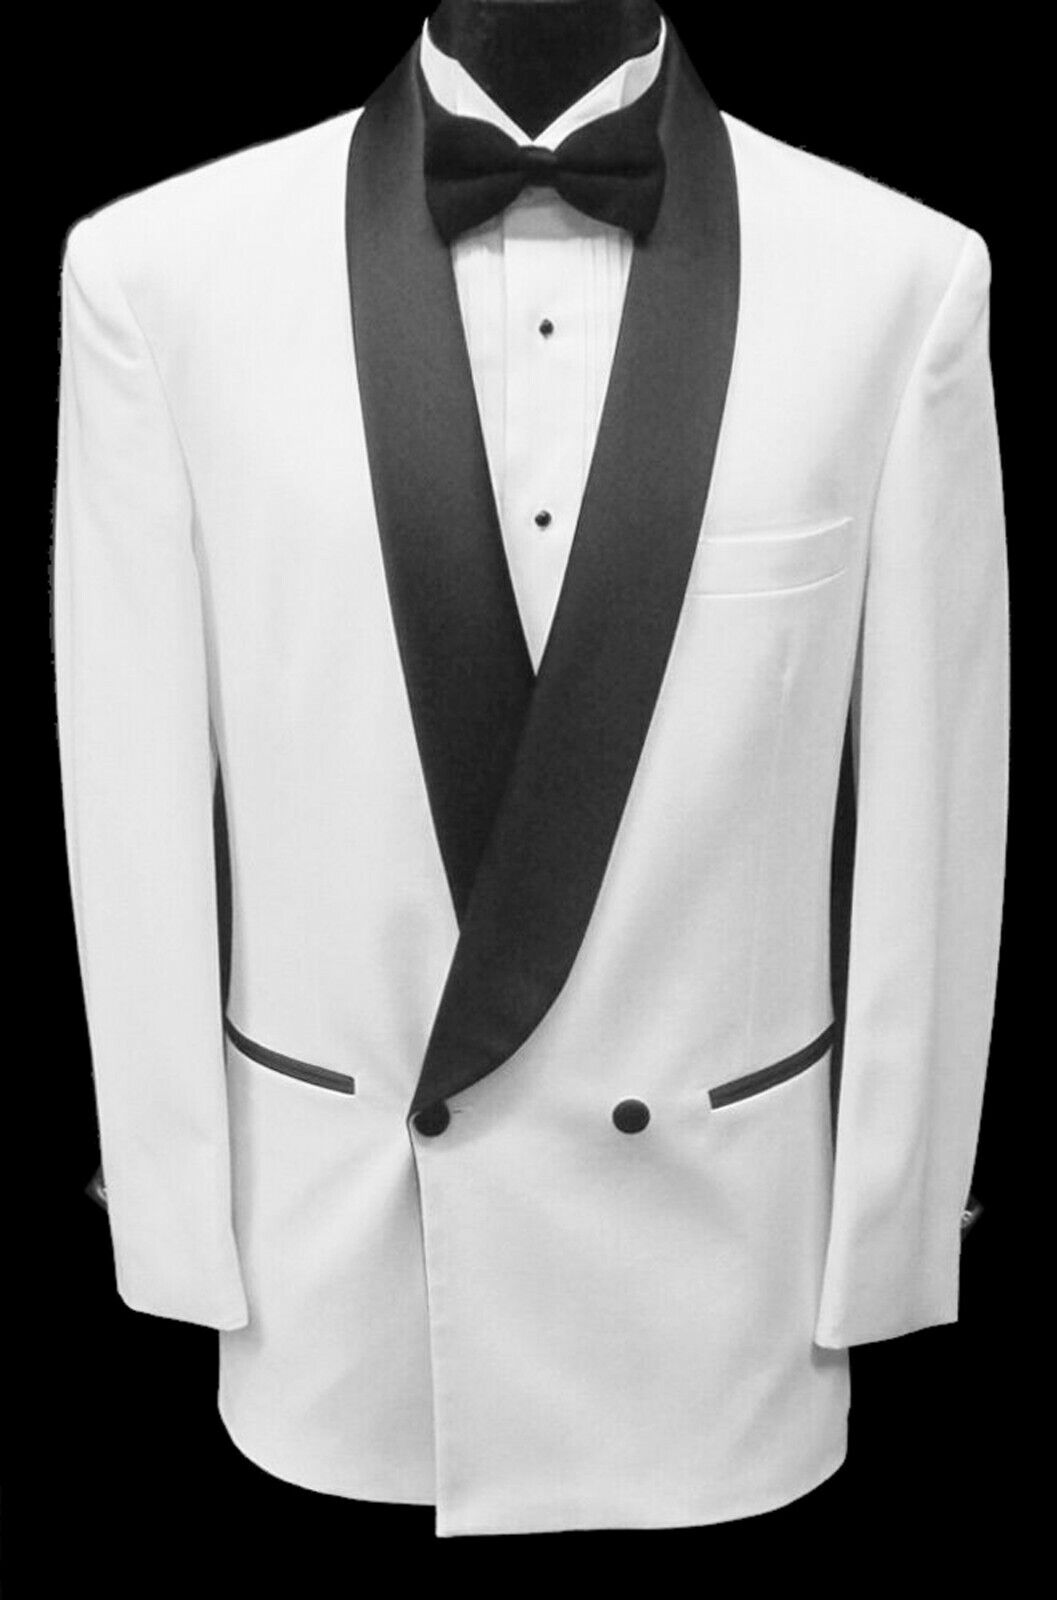 Men\'s White Double Breasted Tuxedo Jacket with Black Satin Lapels & Trim 37L